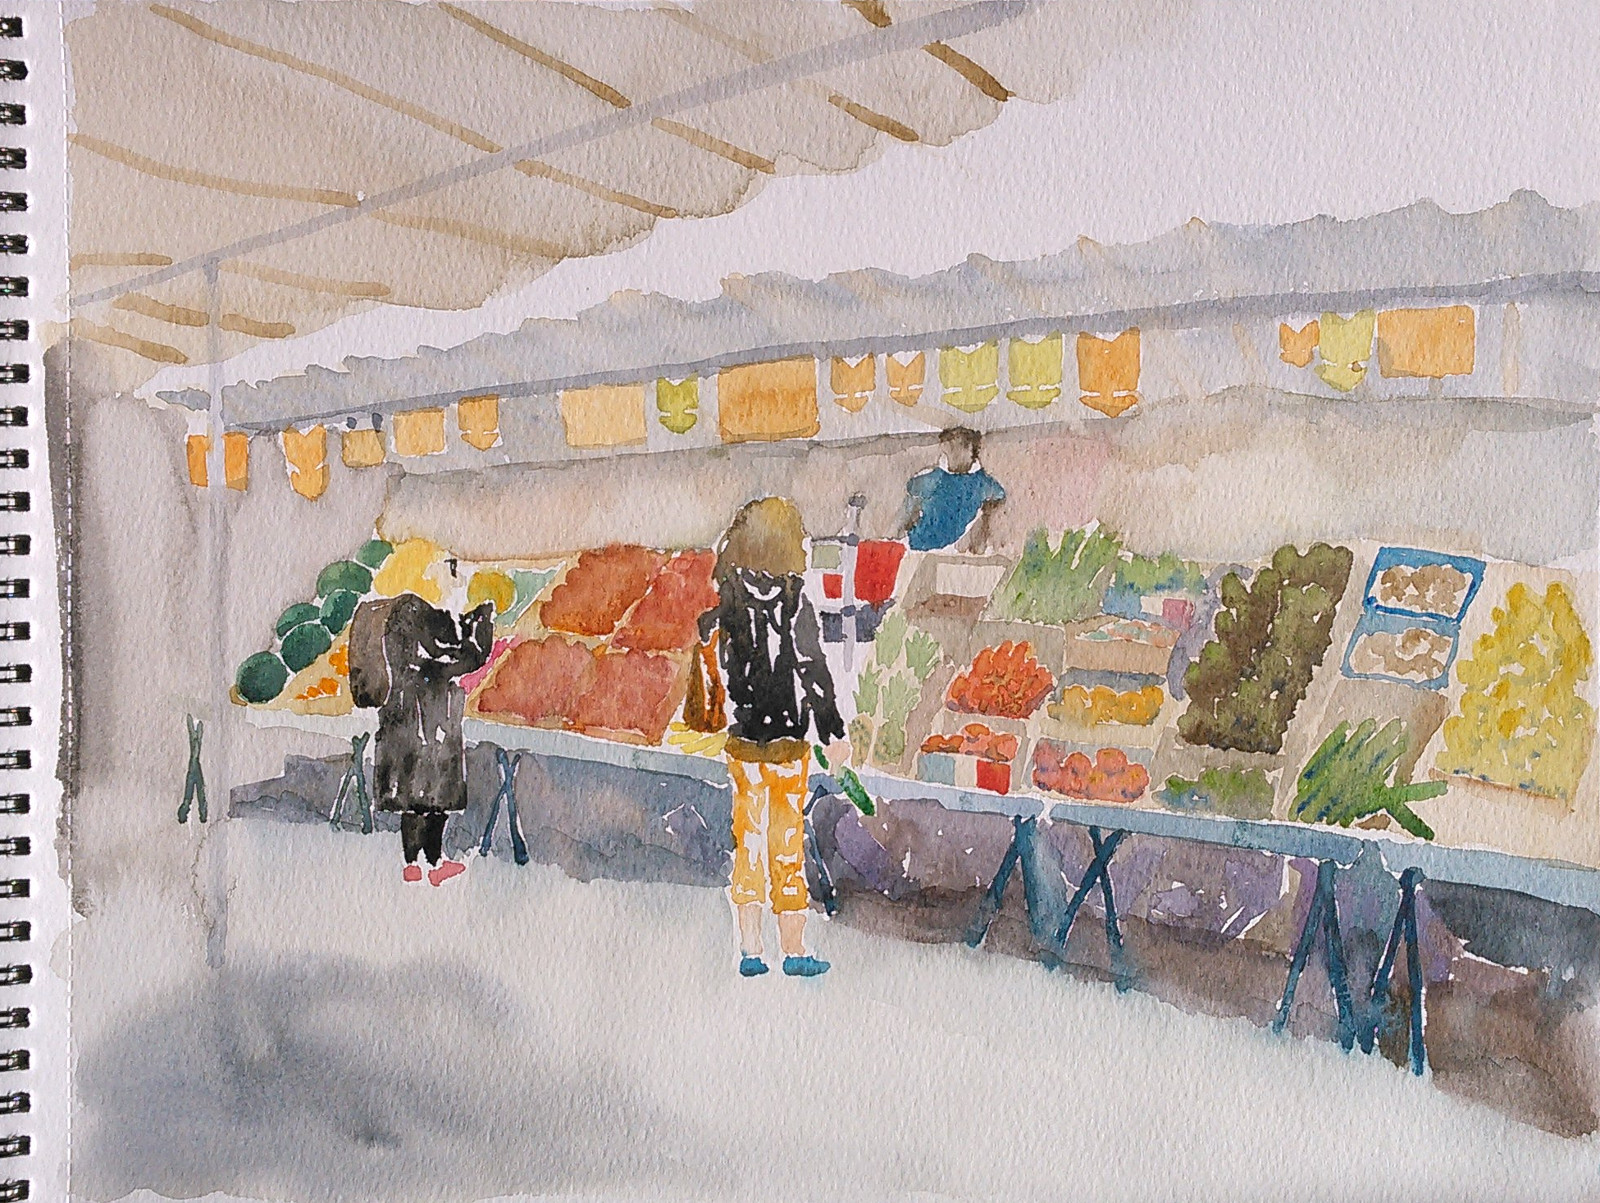 Watercolor at the Maubert market